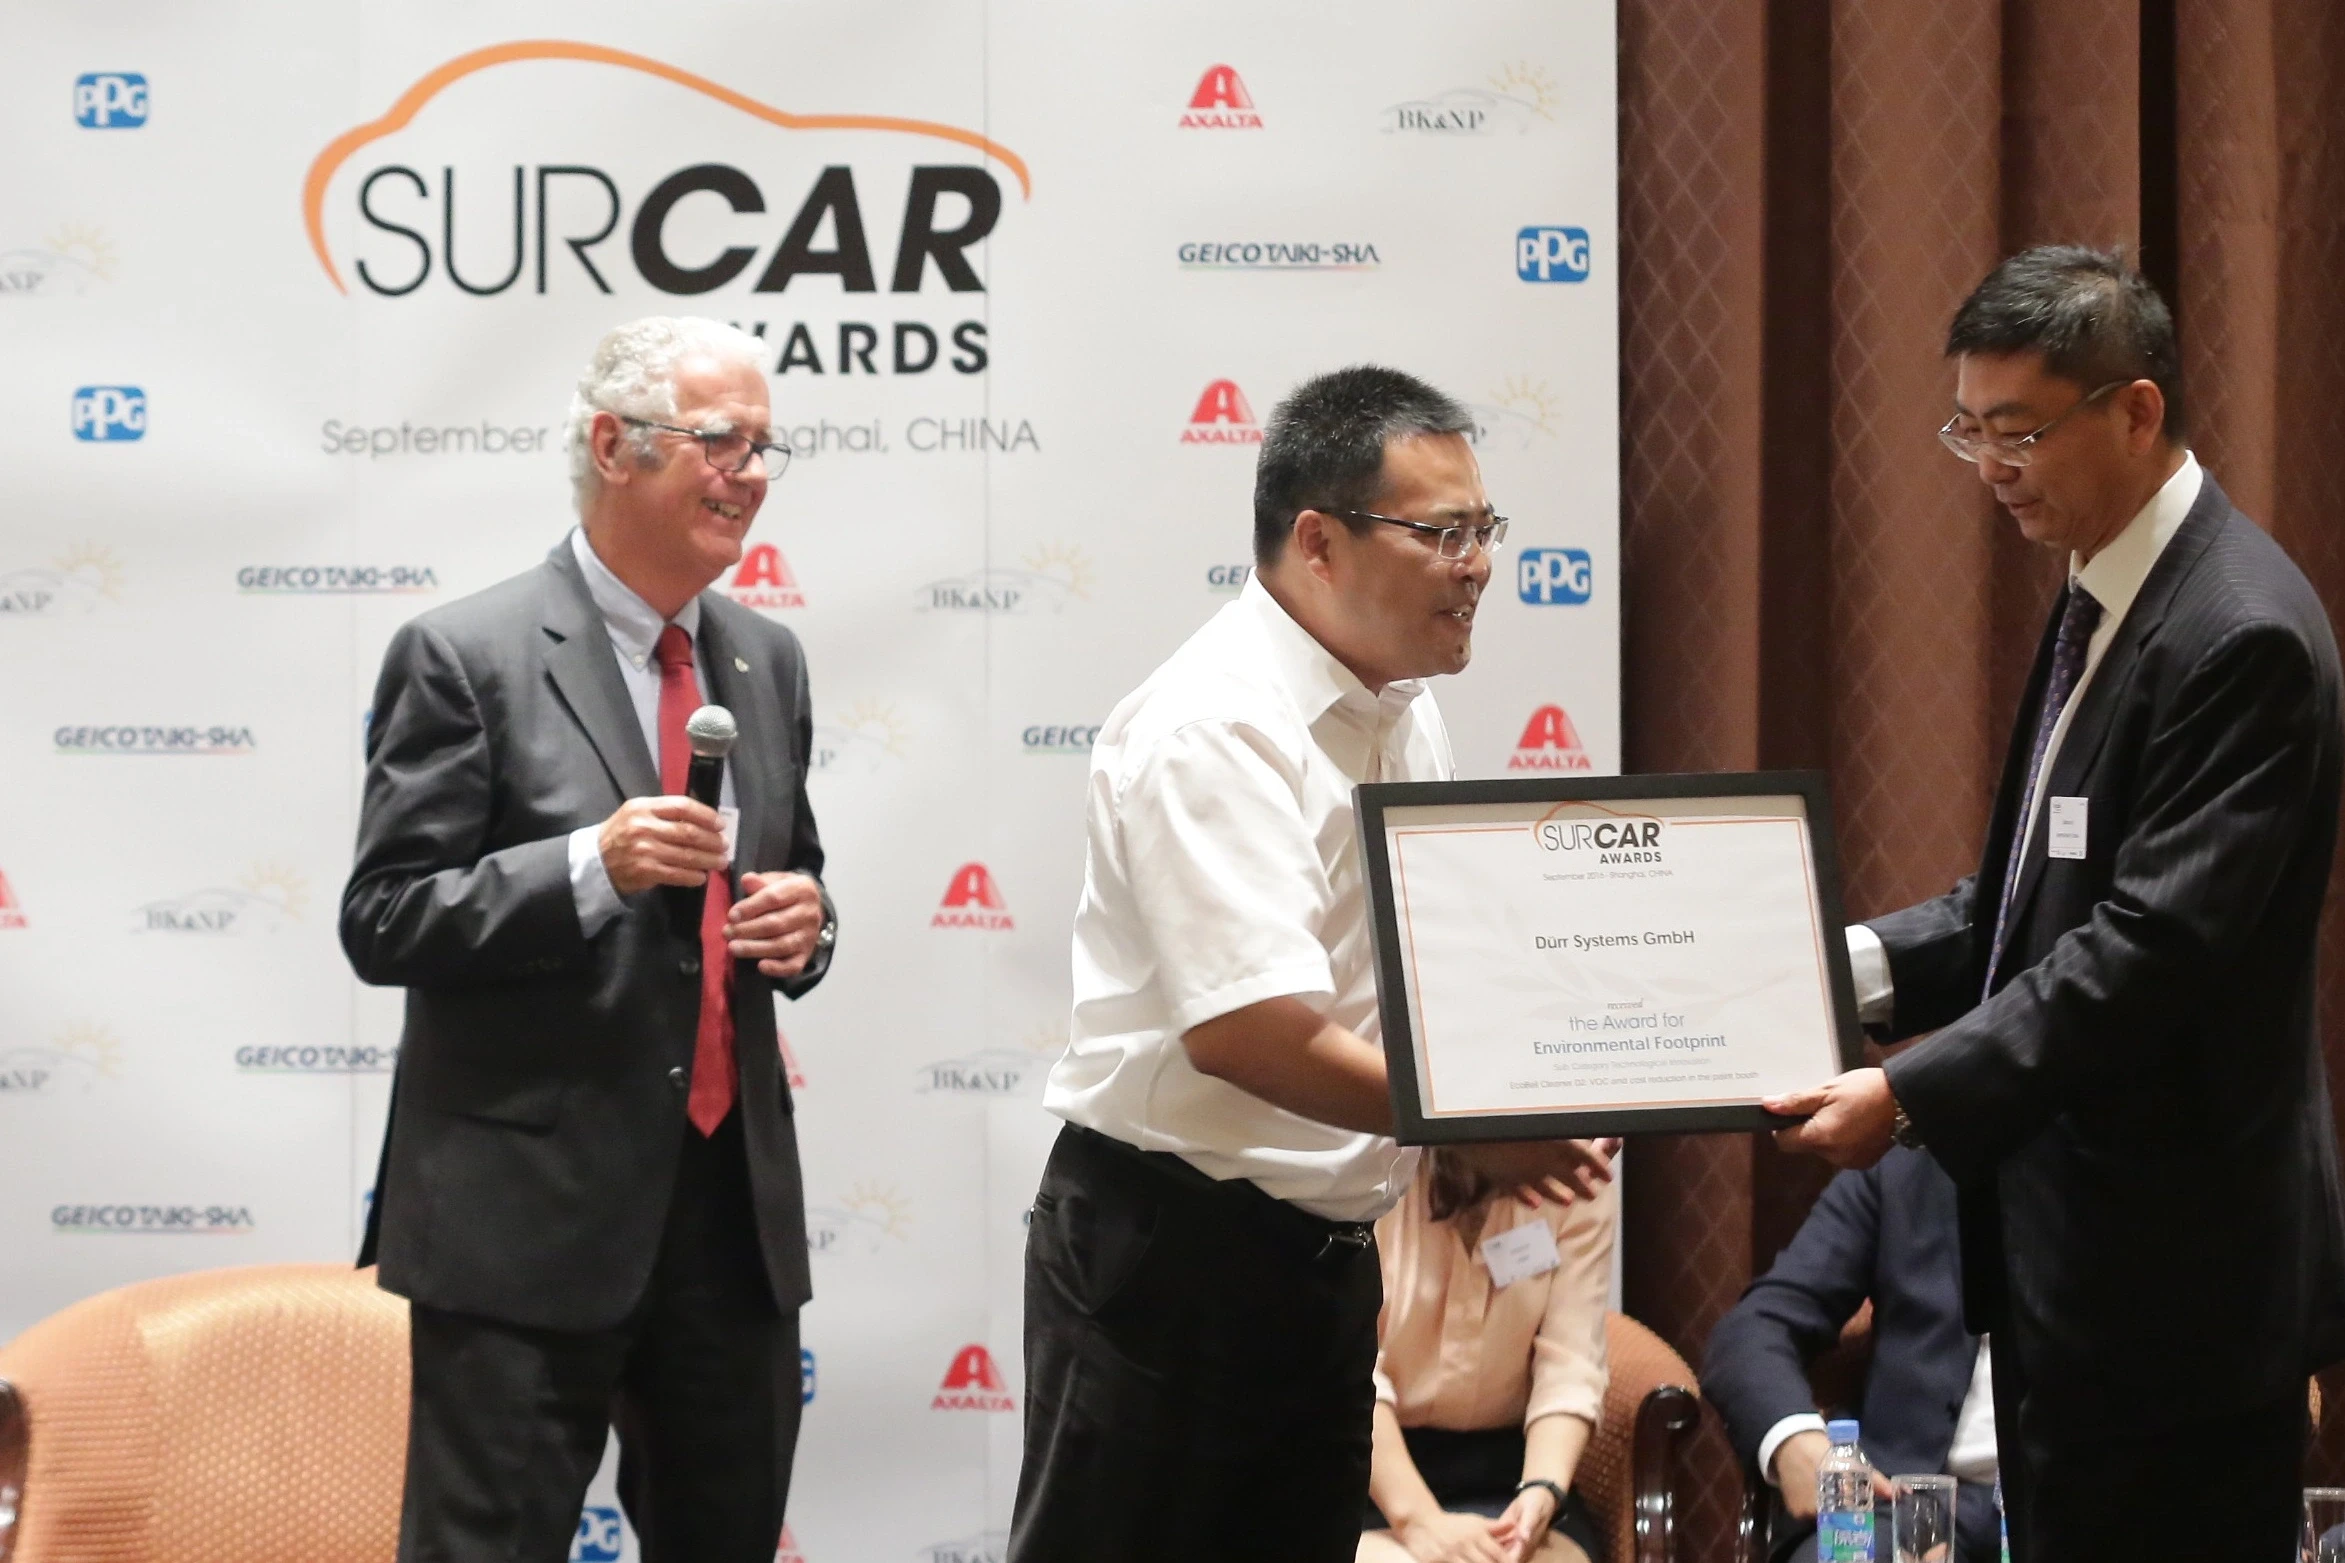 Dürr receives three SURCAR awards